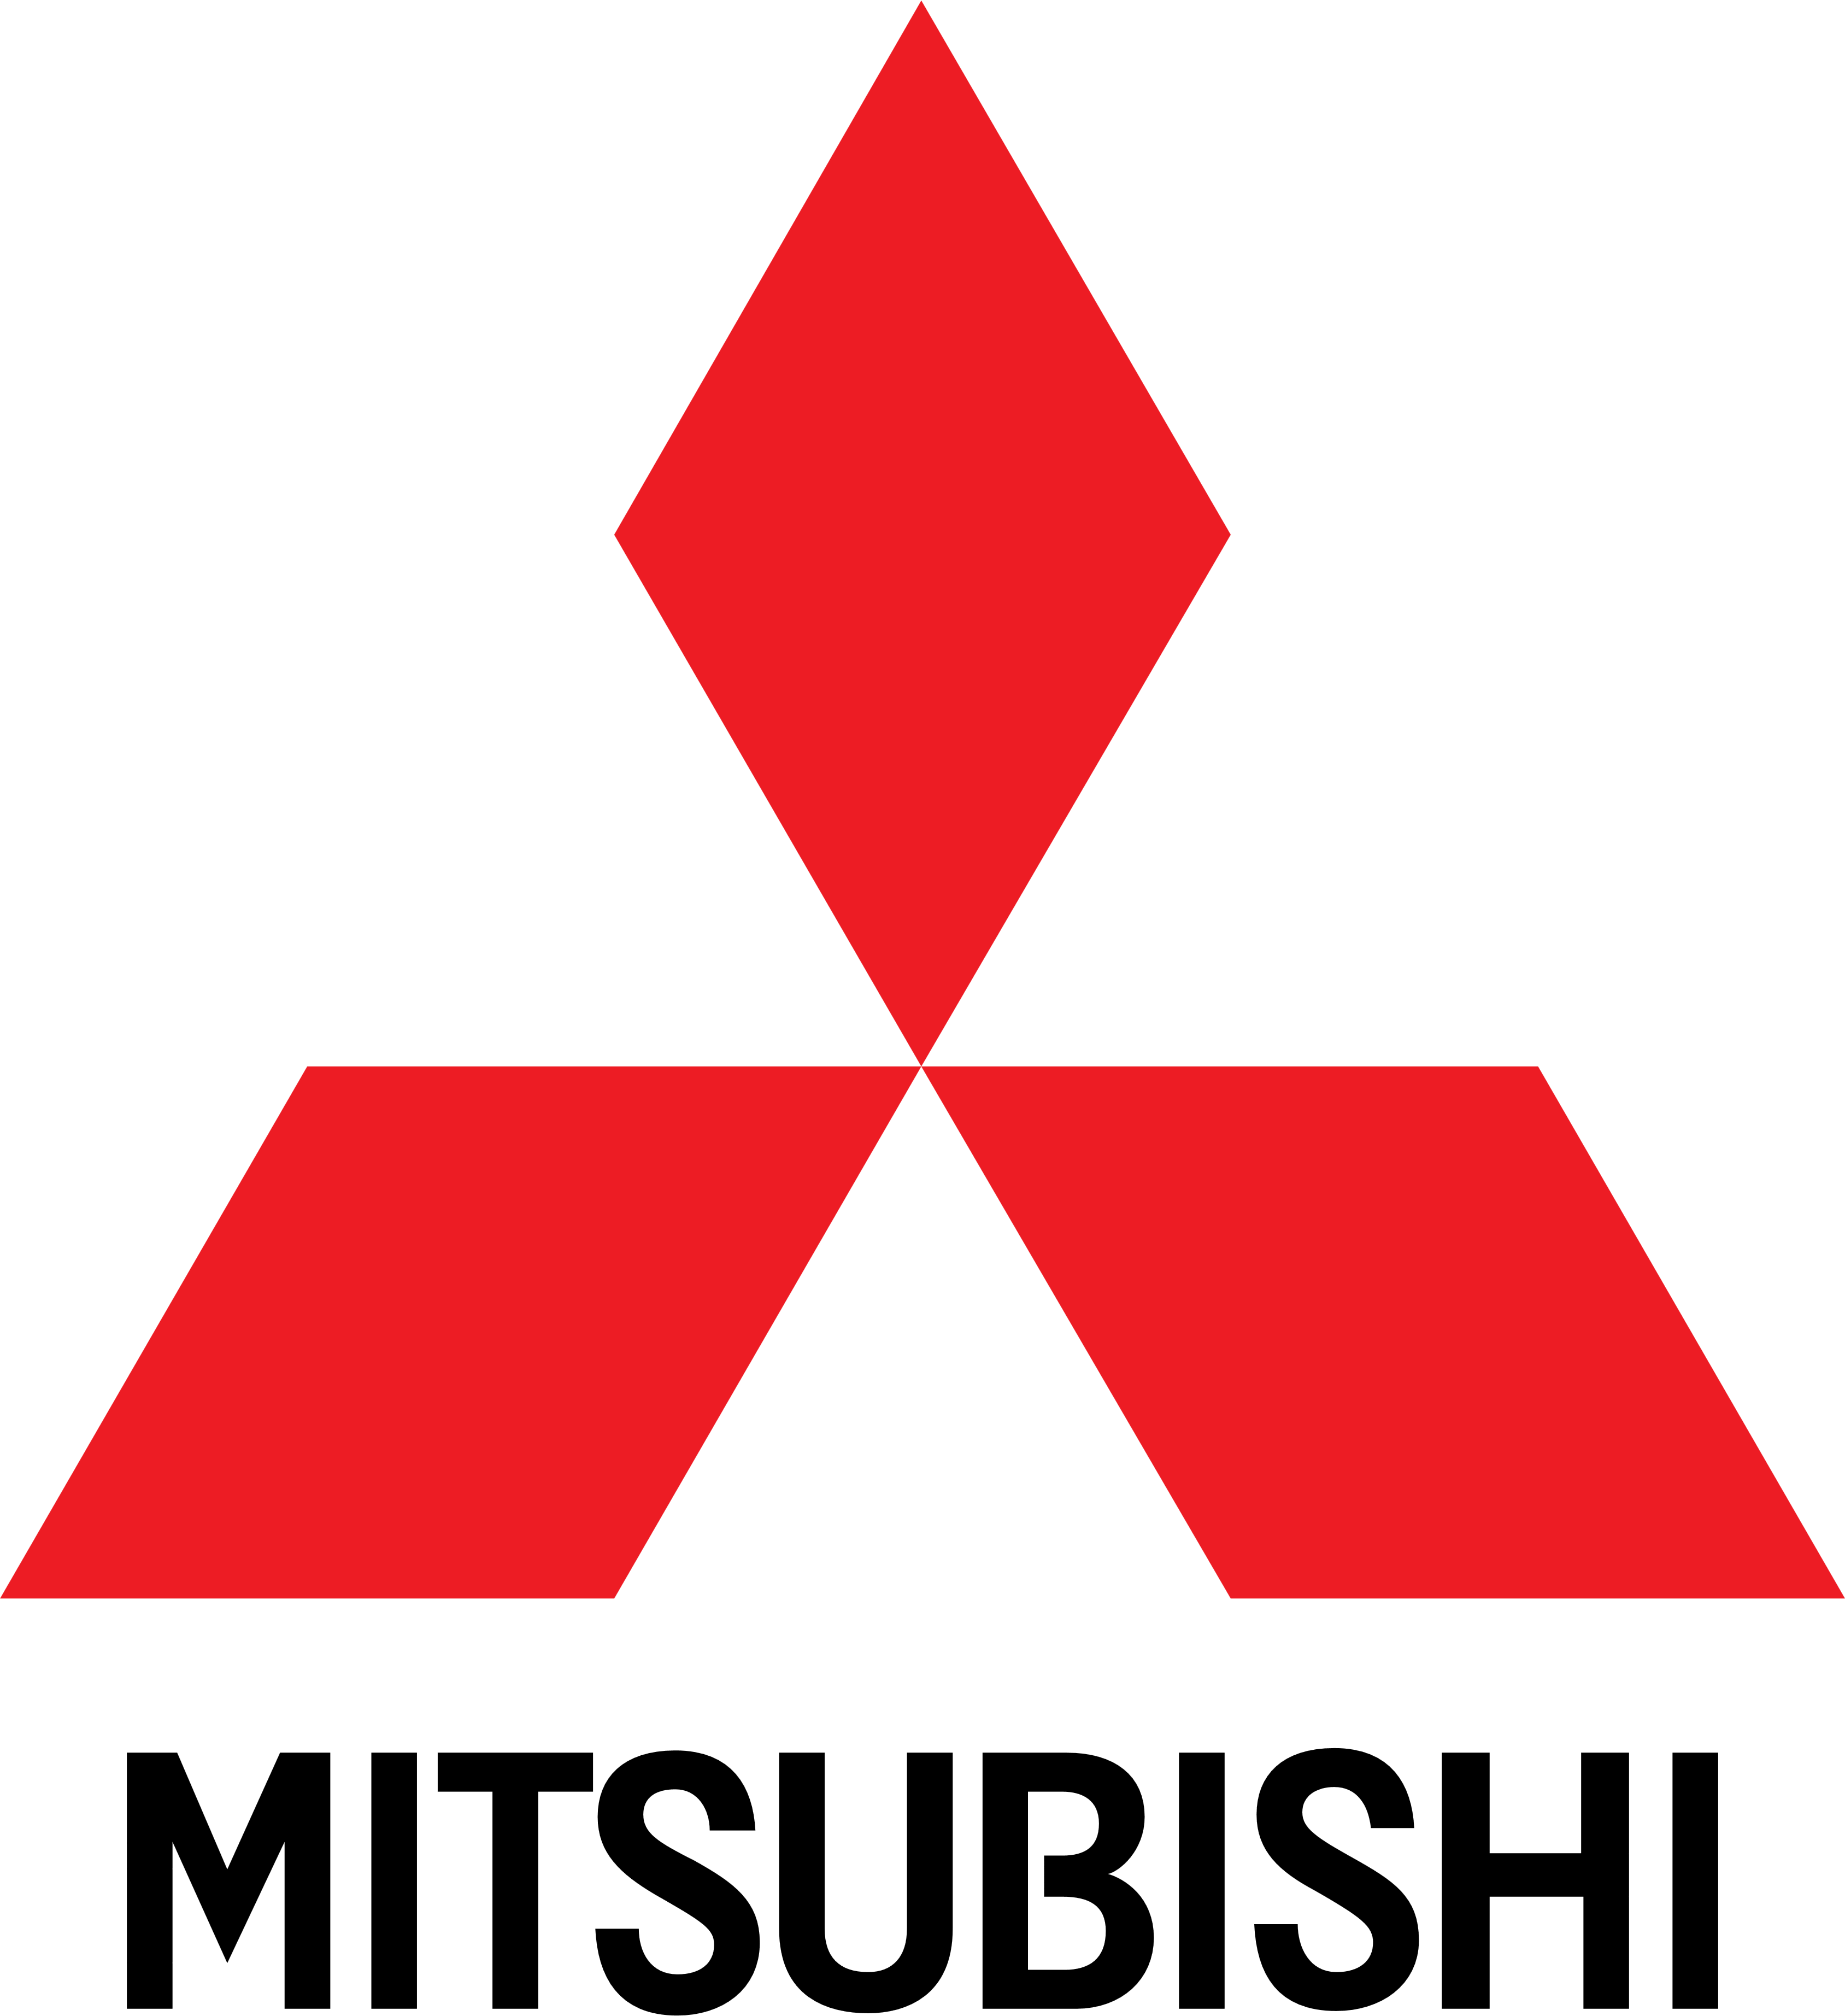 Mitsubishi logo (Present) 200